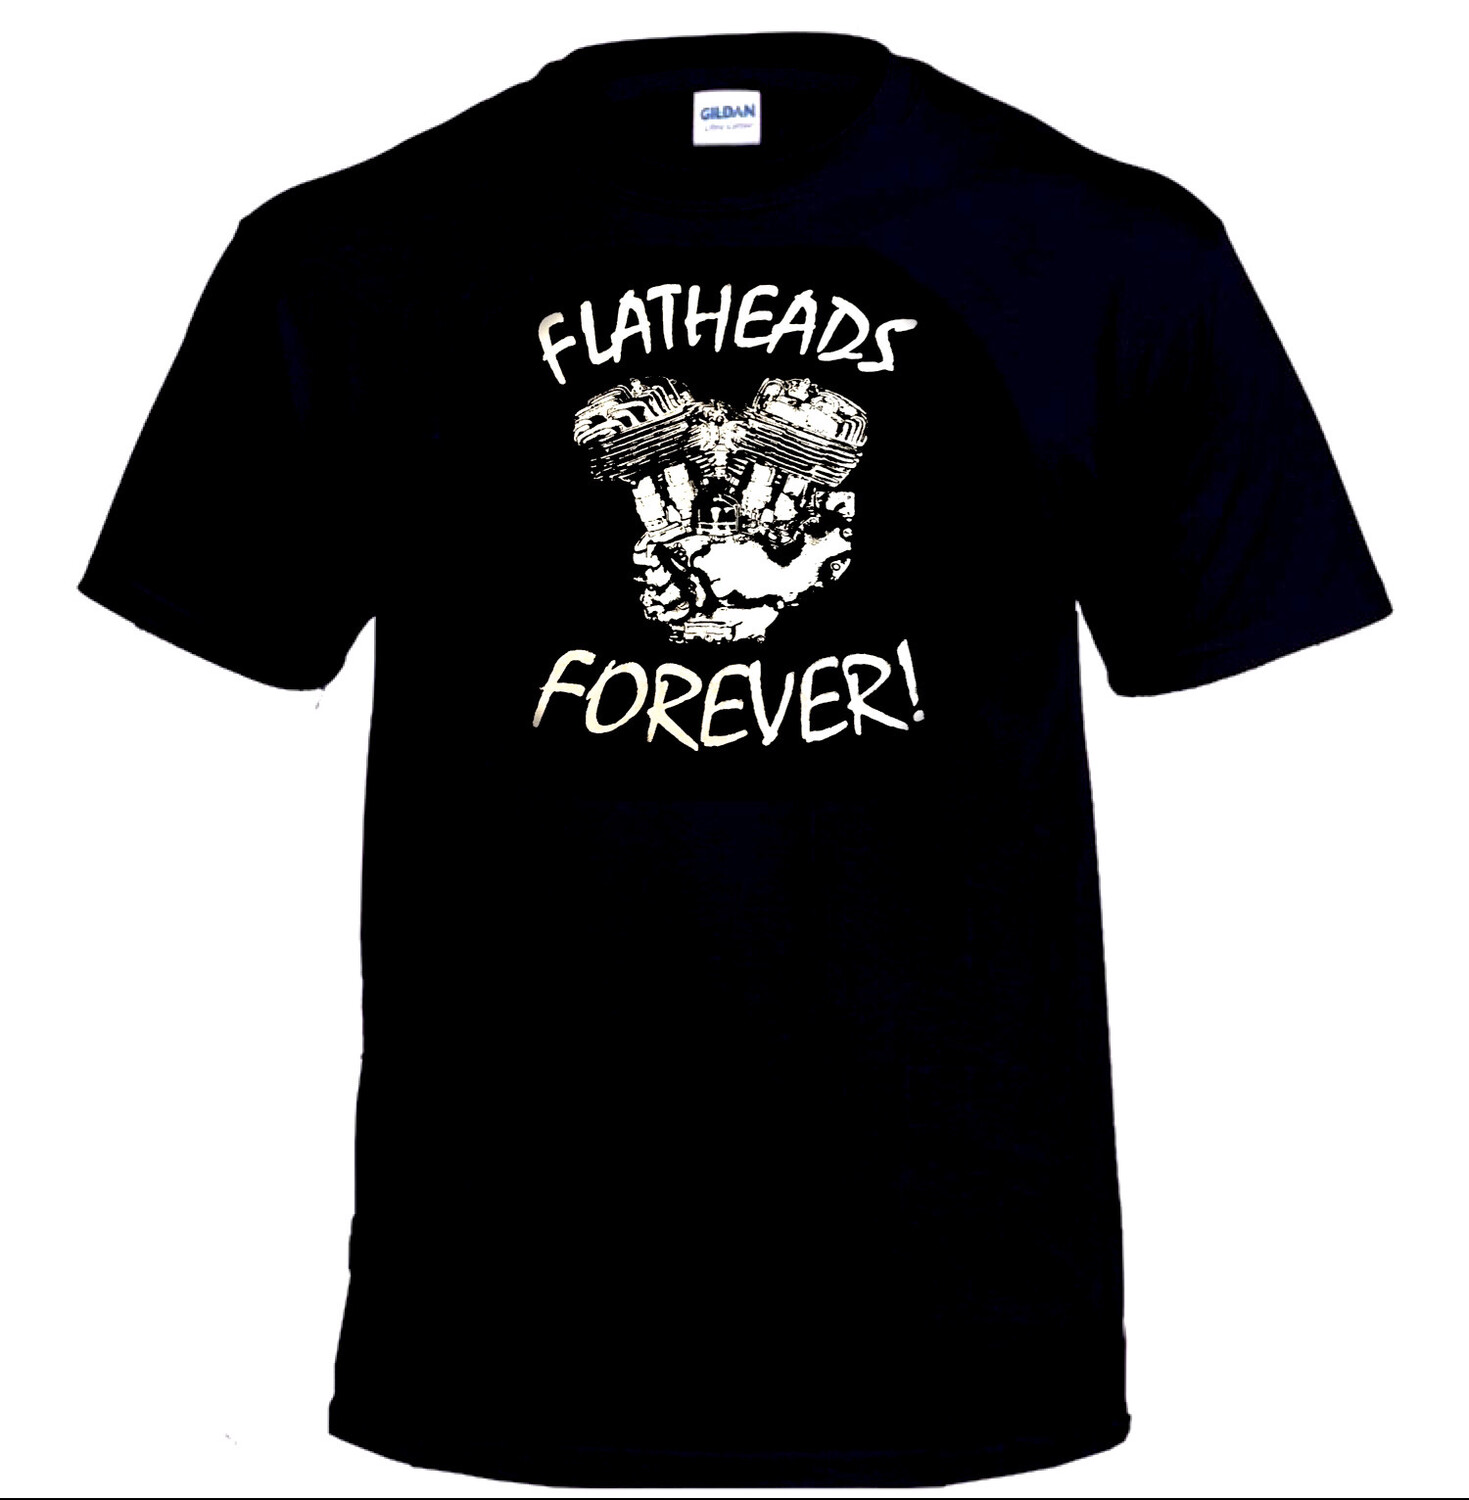 Flatheads Forever!